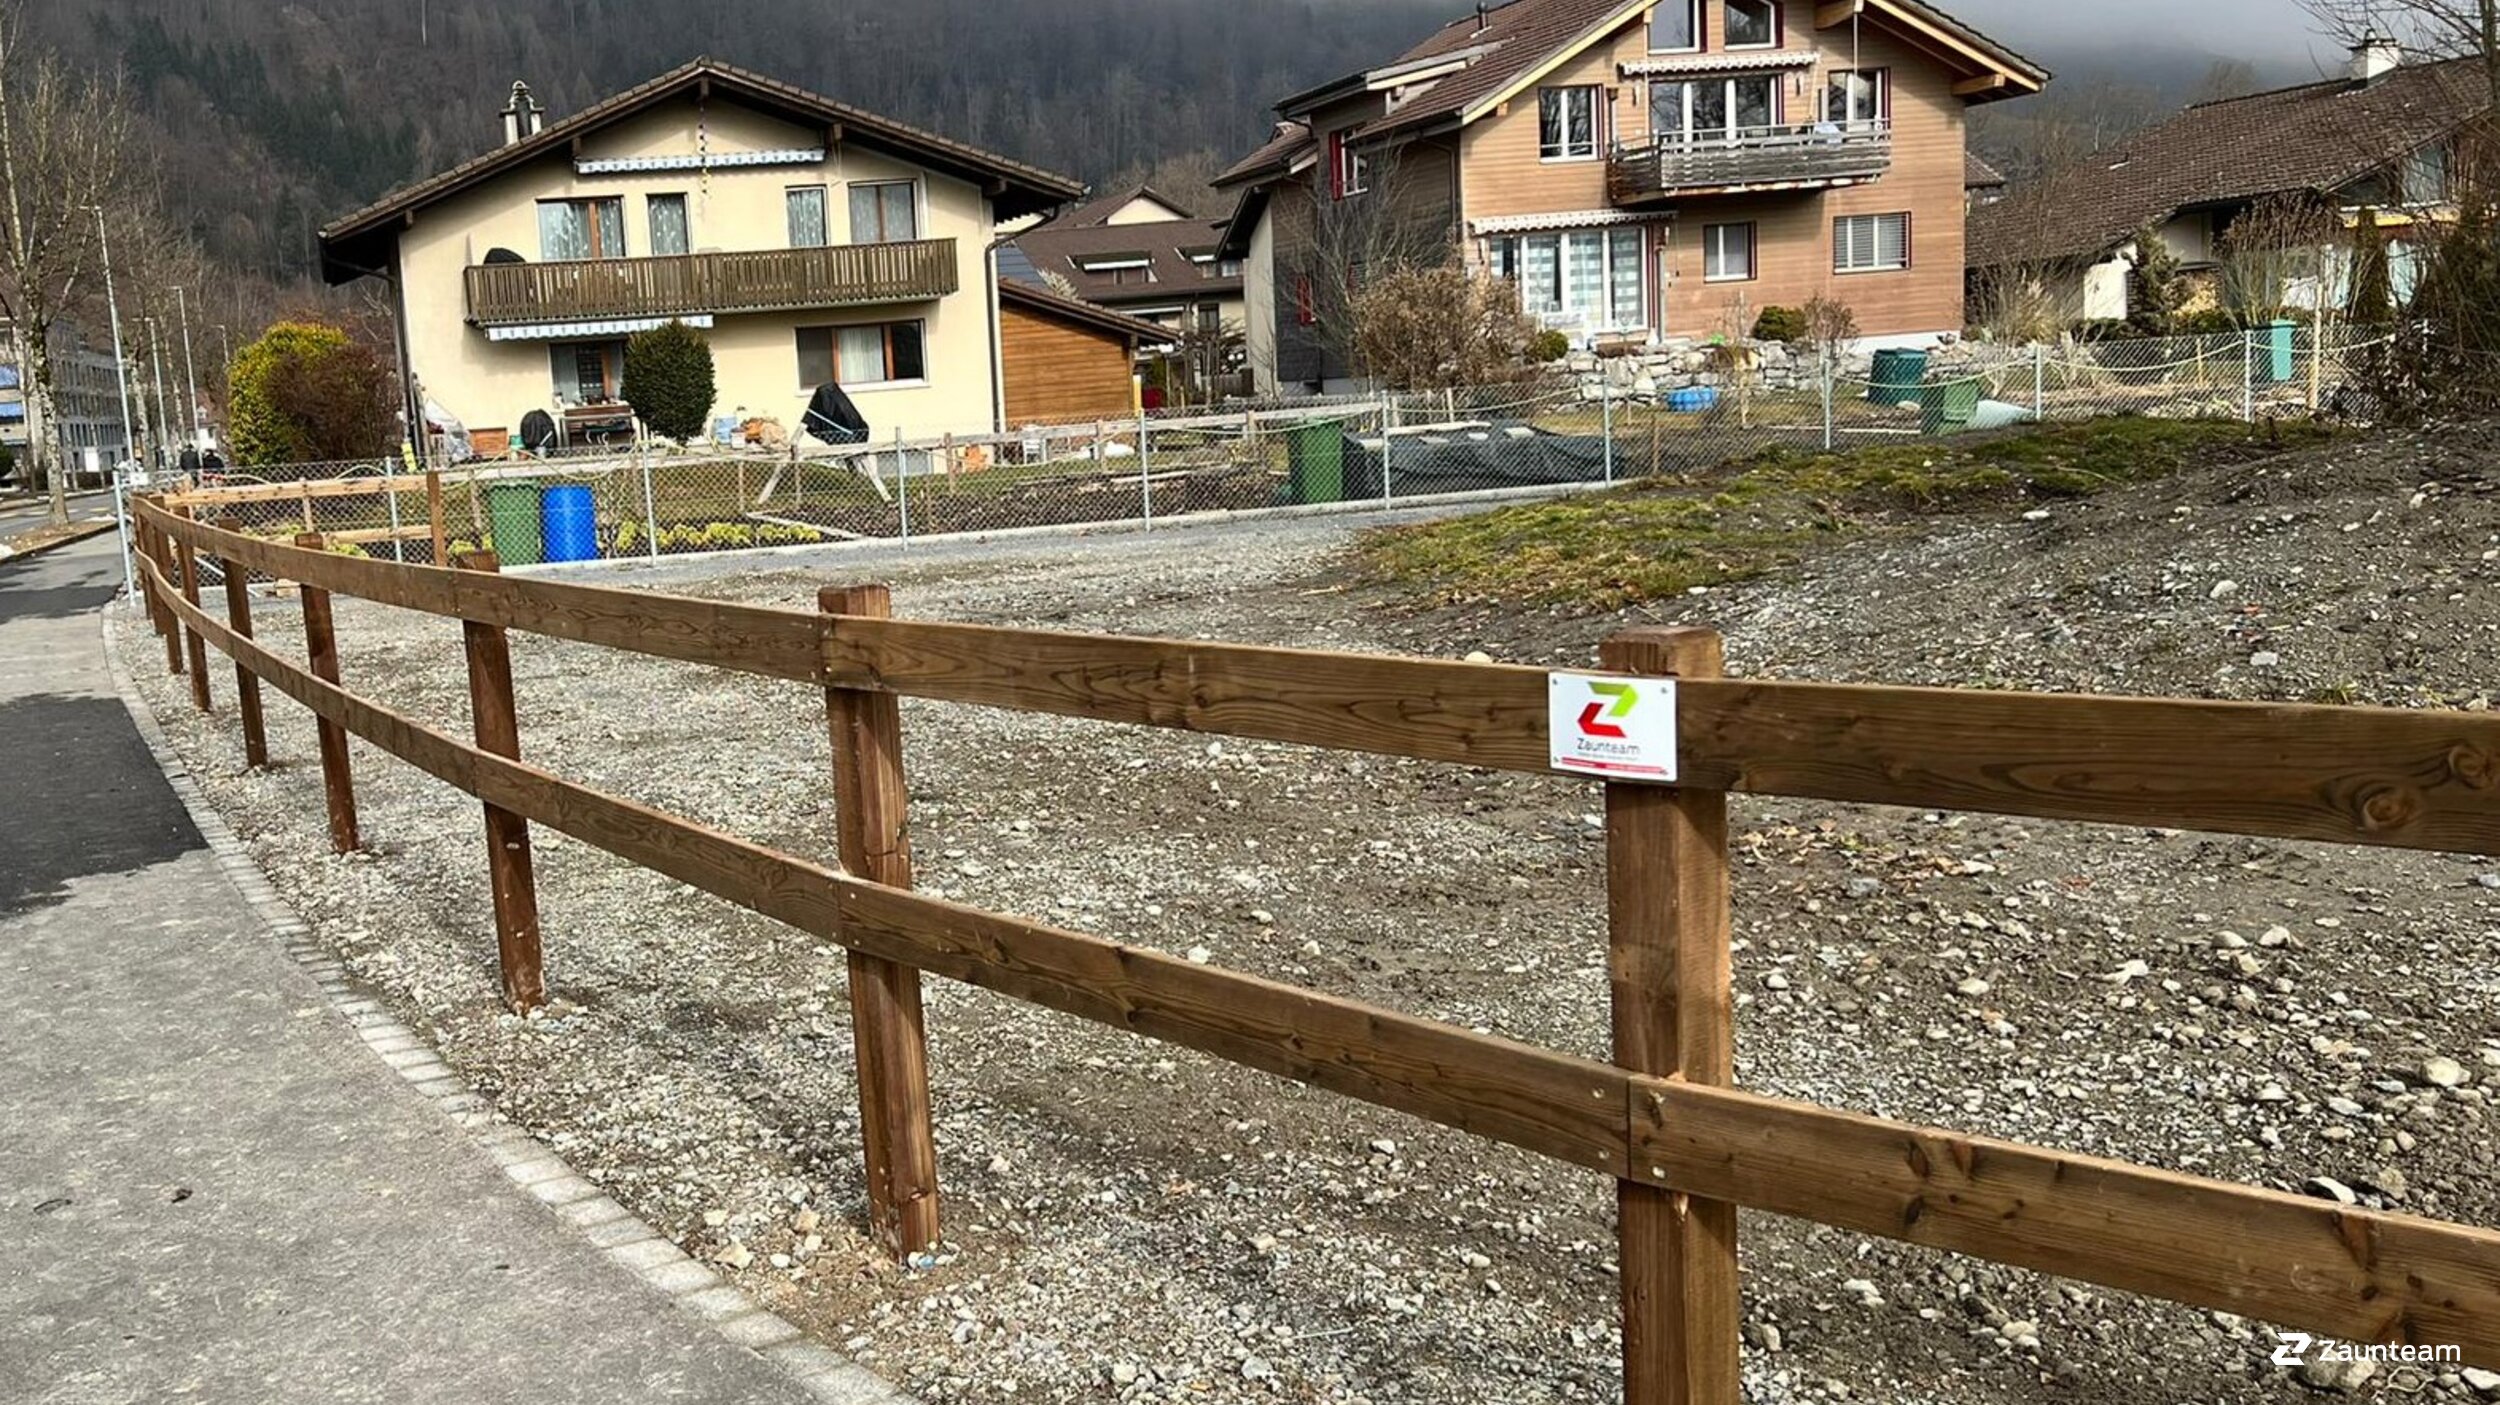 Clôture ranch de 2022 à 3800 Interlaken Suisse de Zaunteam Berner Oberland.